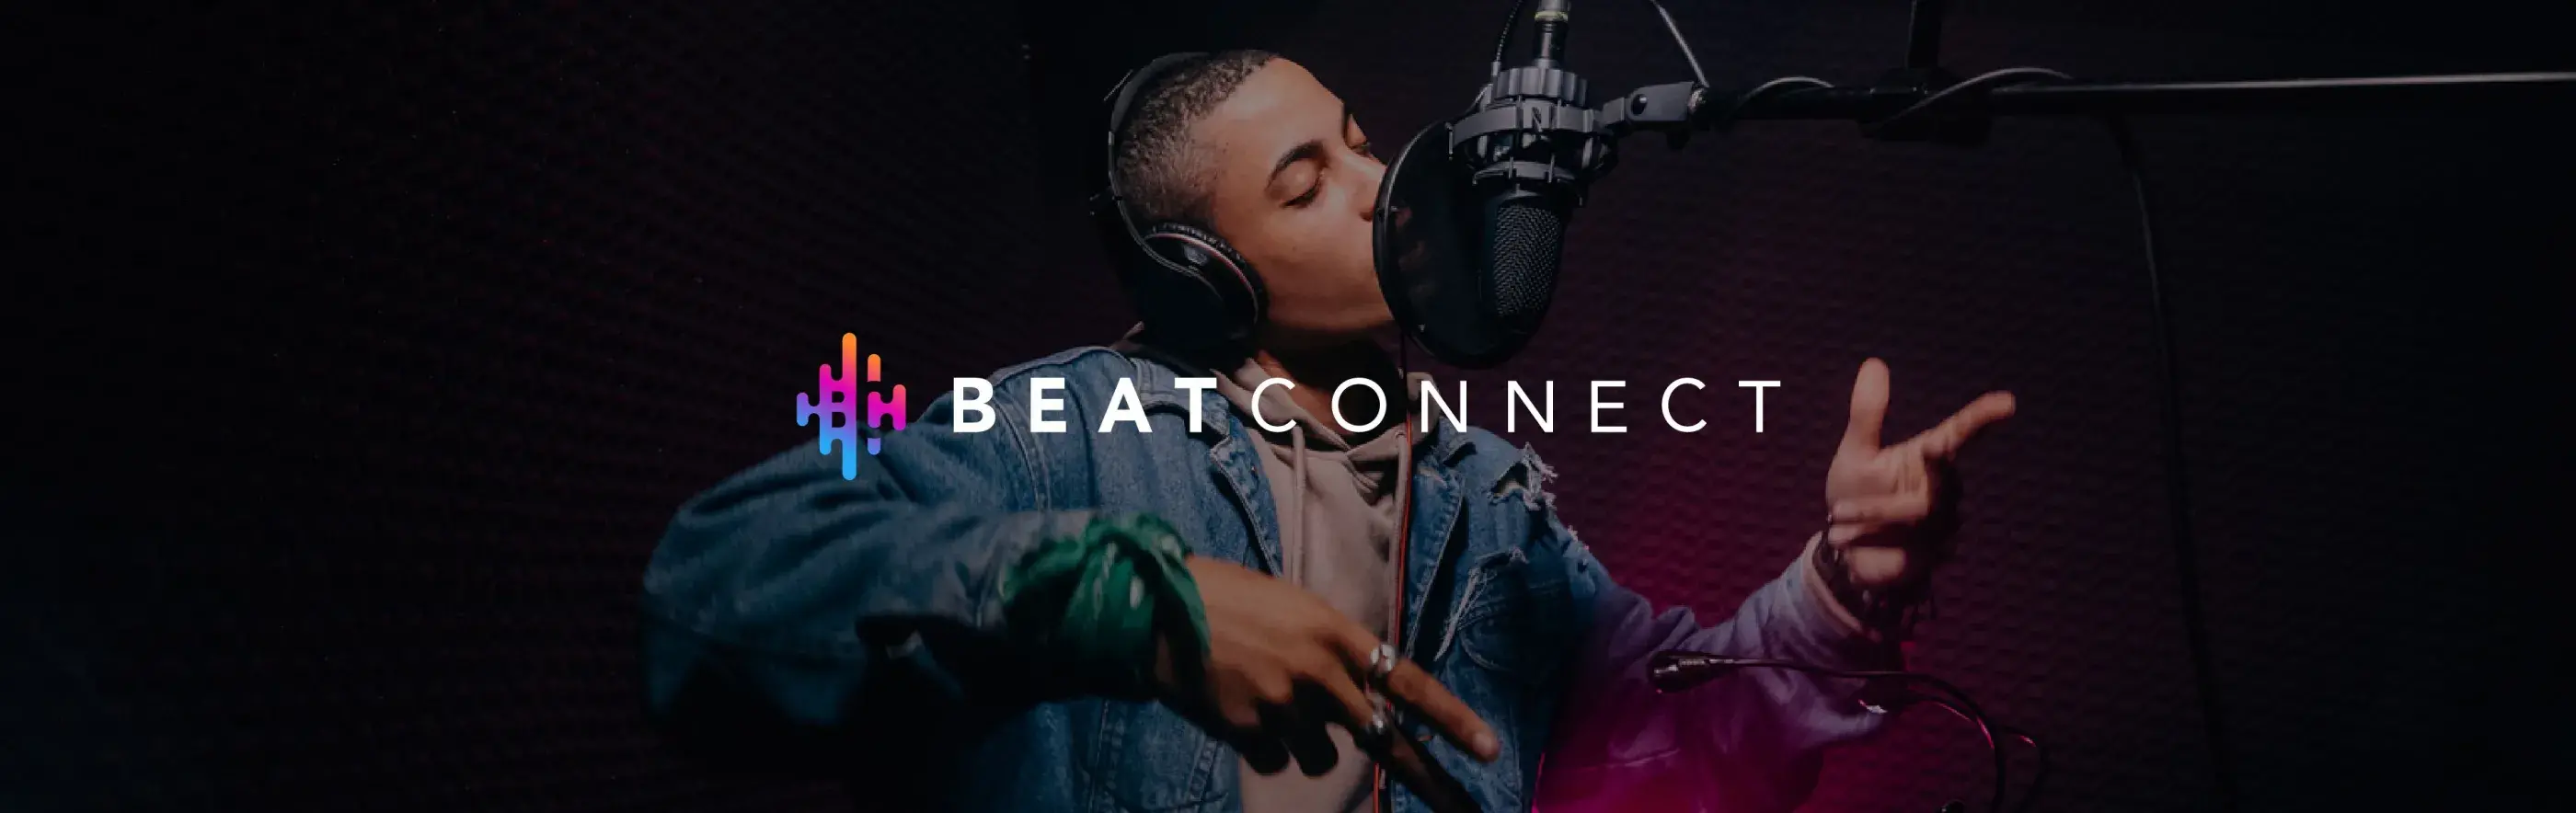 Beatconnect